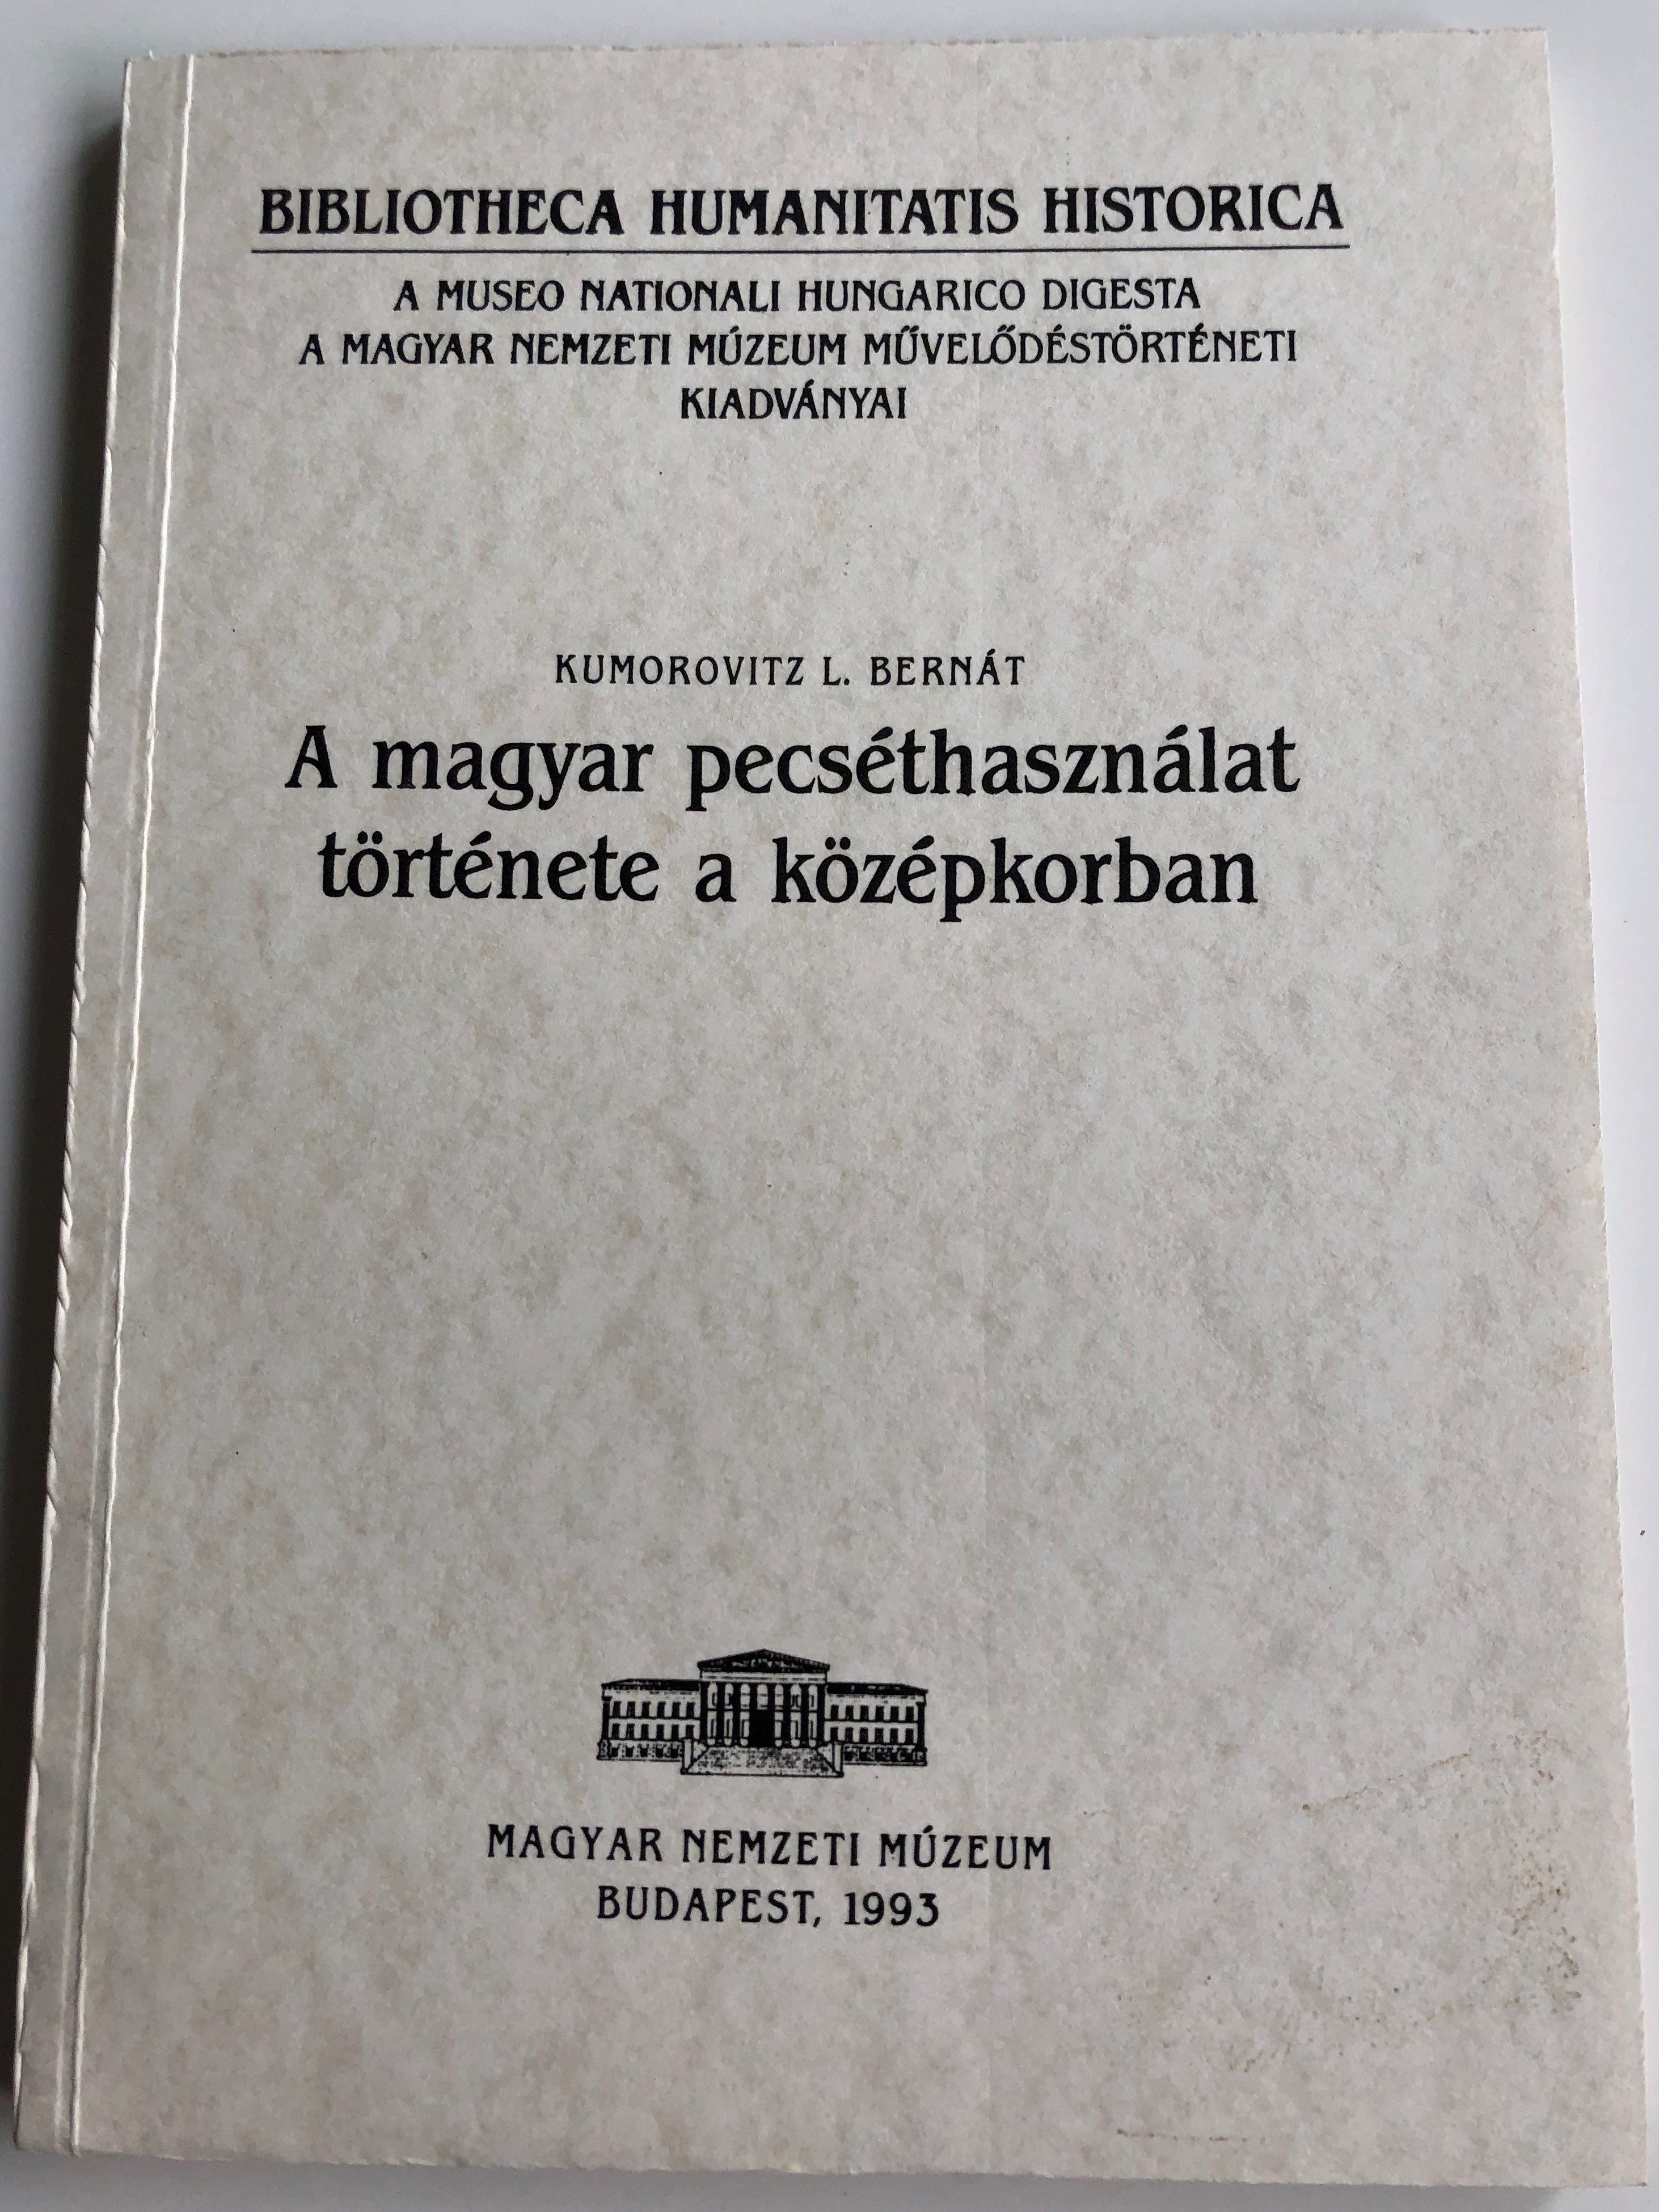 a-magyar-pecs-thaszn-lat-t-rt-nete-a-k-z-pkorban-by-kumorovitz-l.-bern-t-bibliotheca-humanitatis-historica-1.jpg